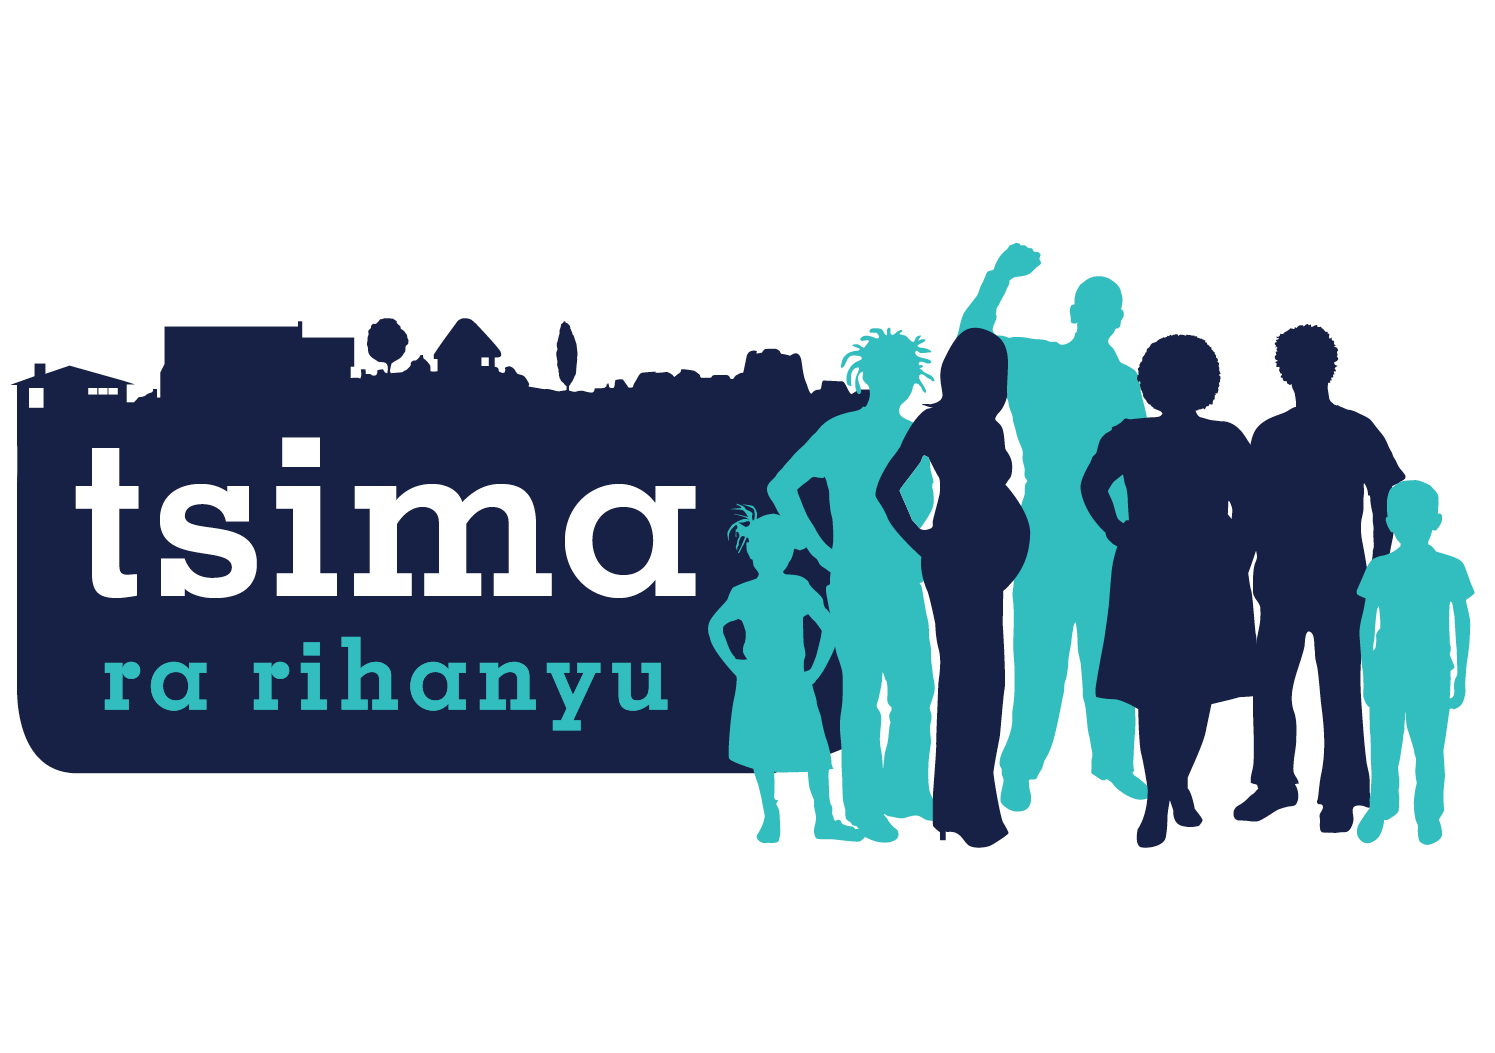 The tsima project logo